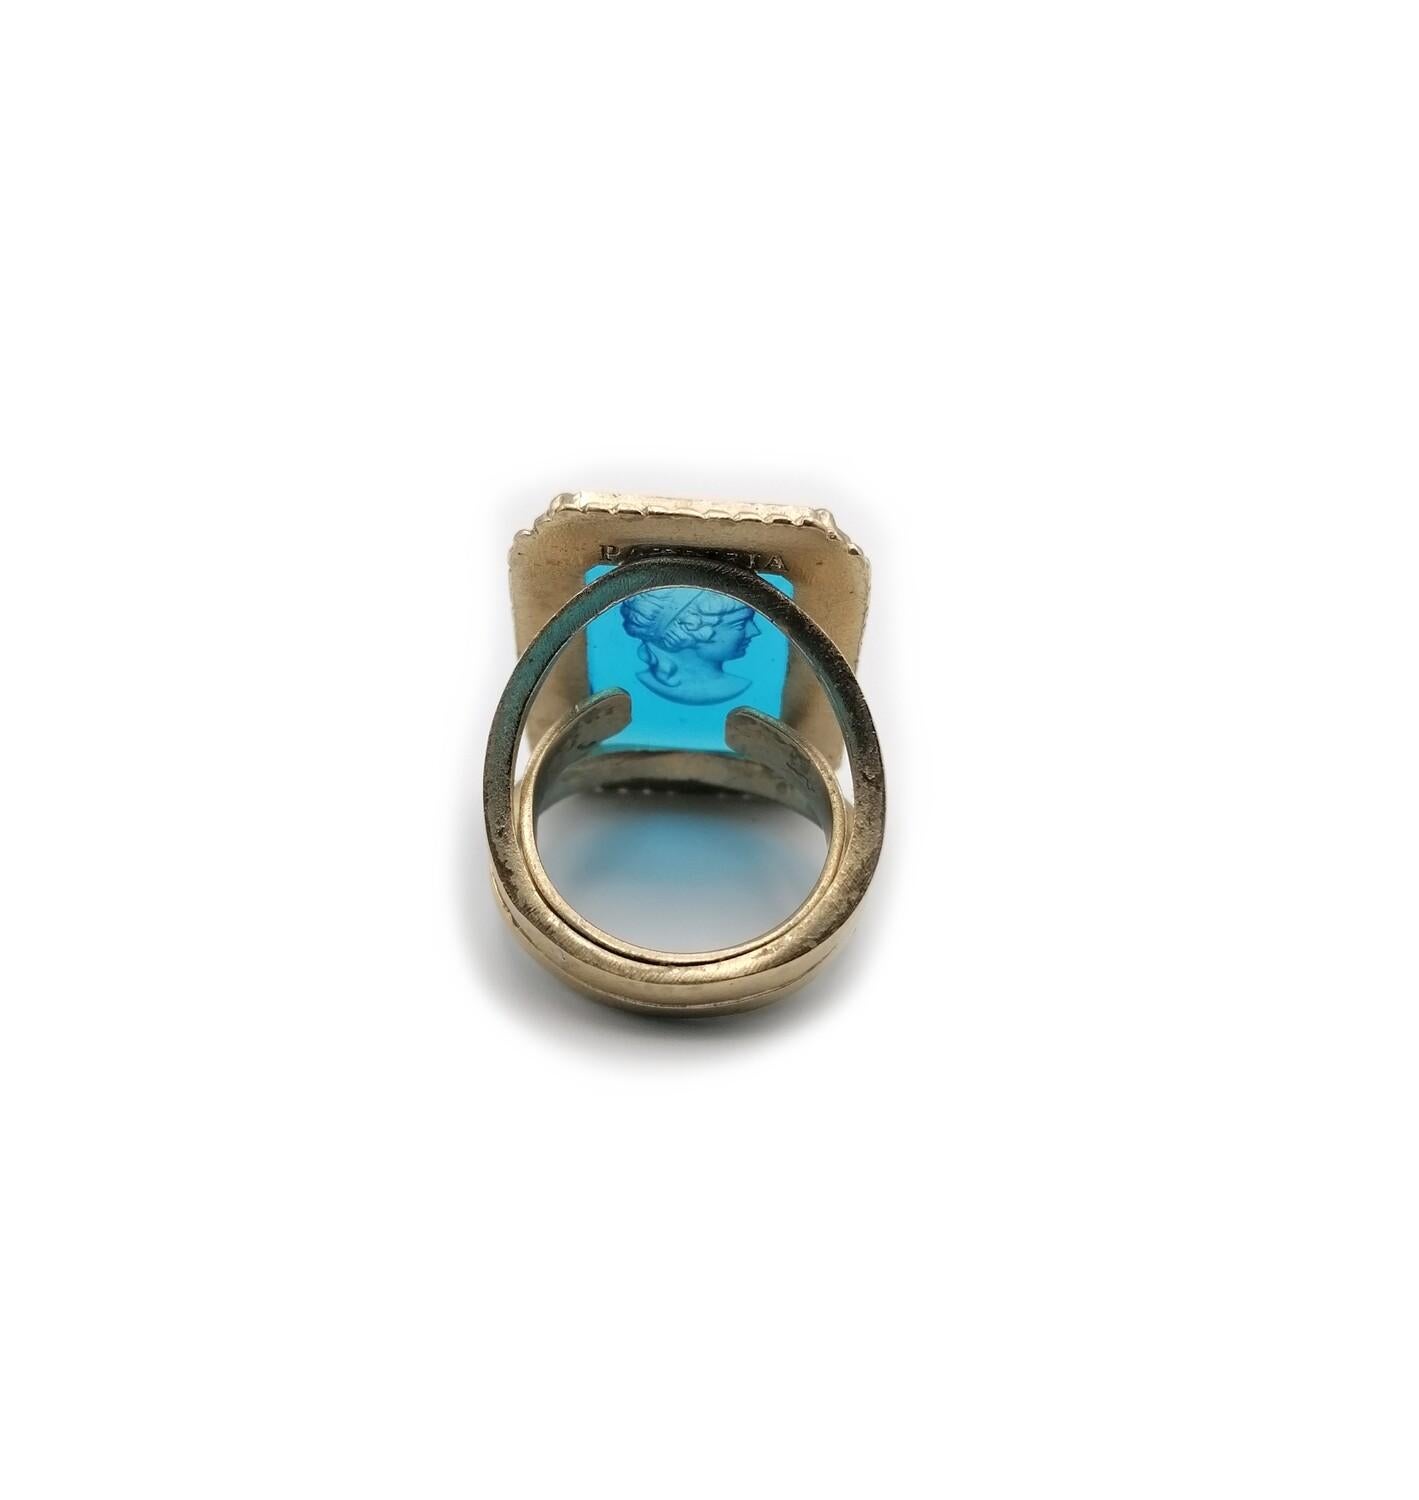 Artisan Pure Bronze and Blue Murano Glass Ring by Patrizia Daliana For Sale